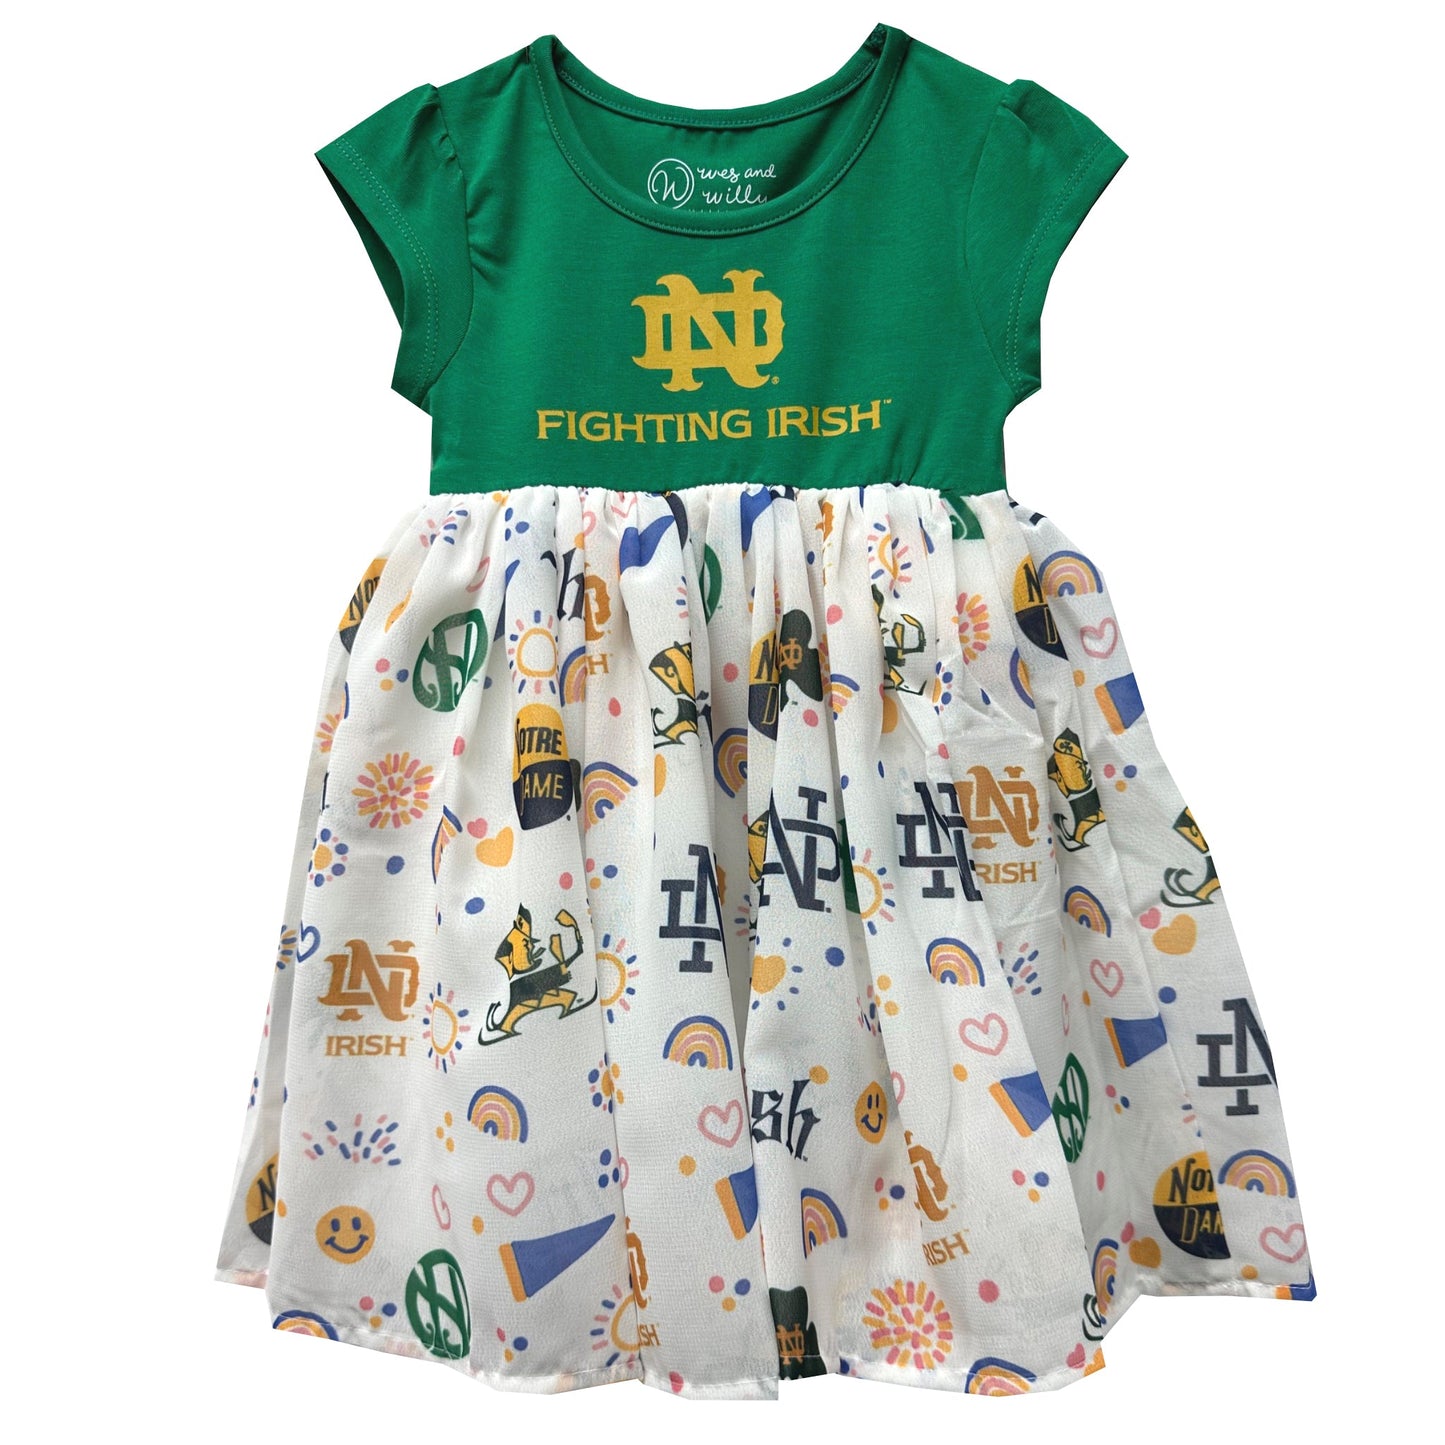 Notre Dame Fighting Irish youth Princess Dress